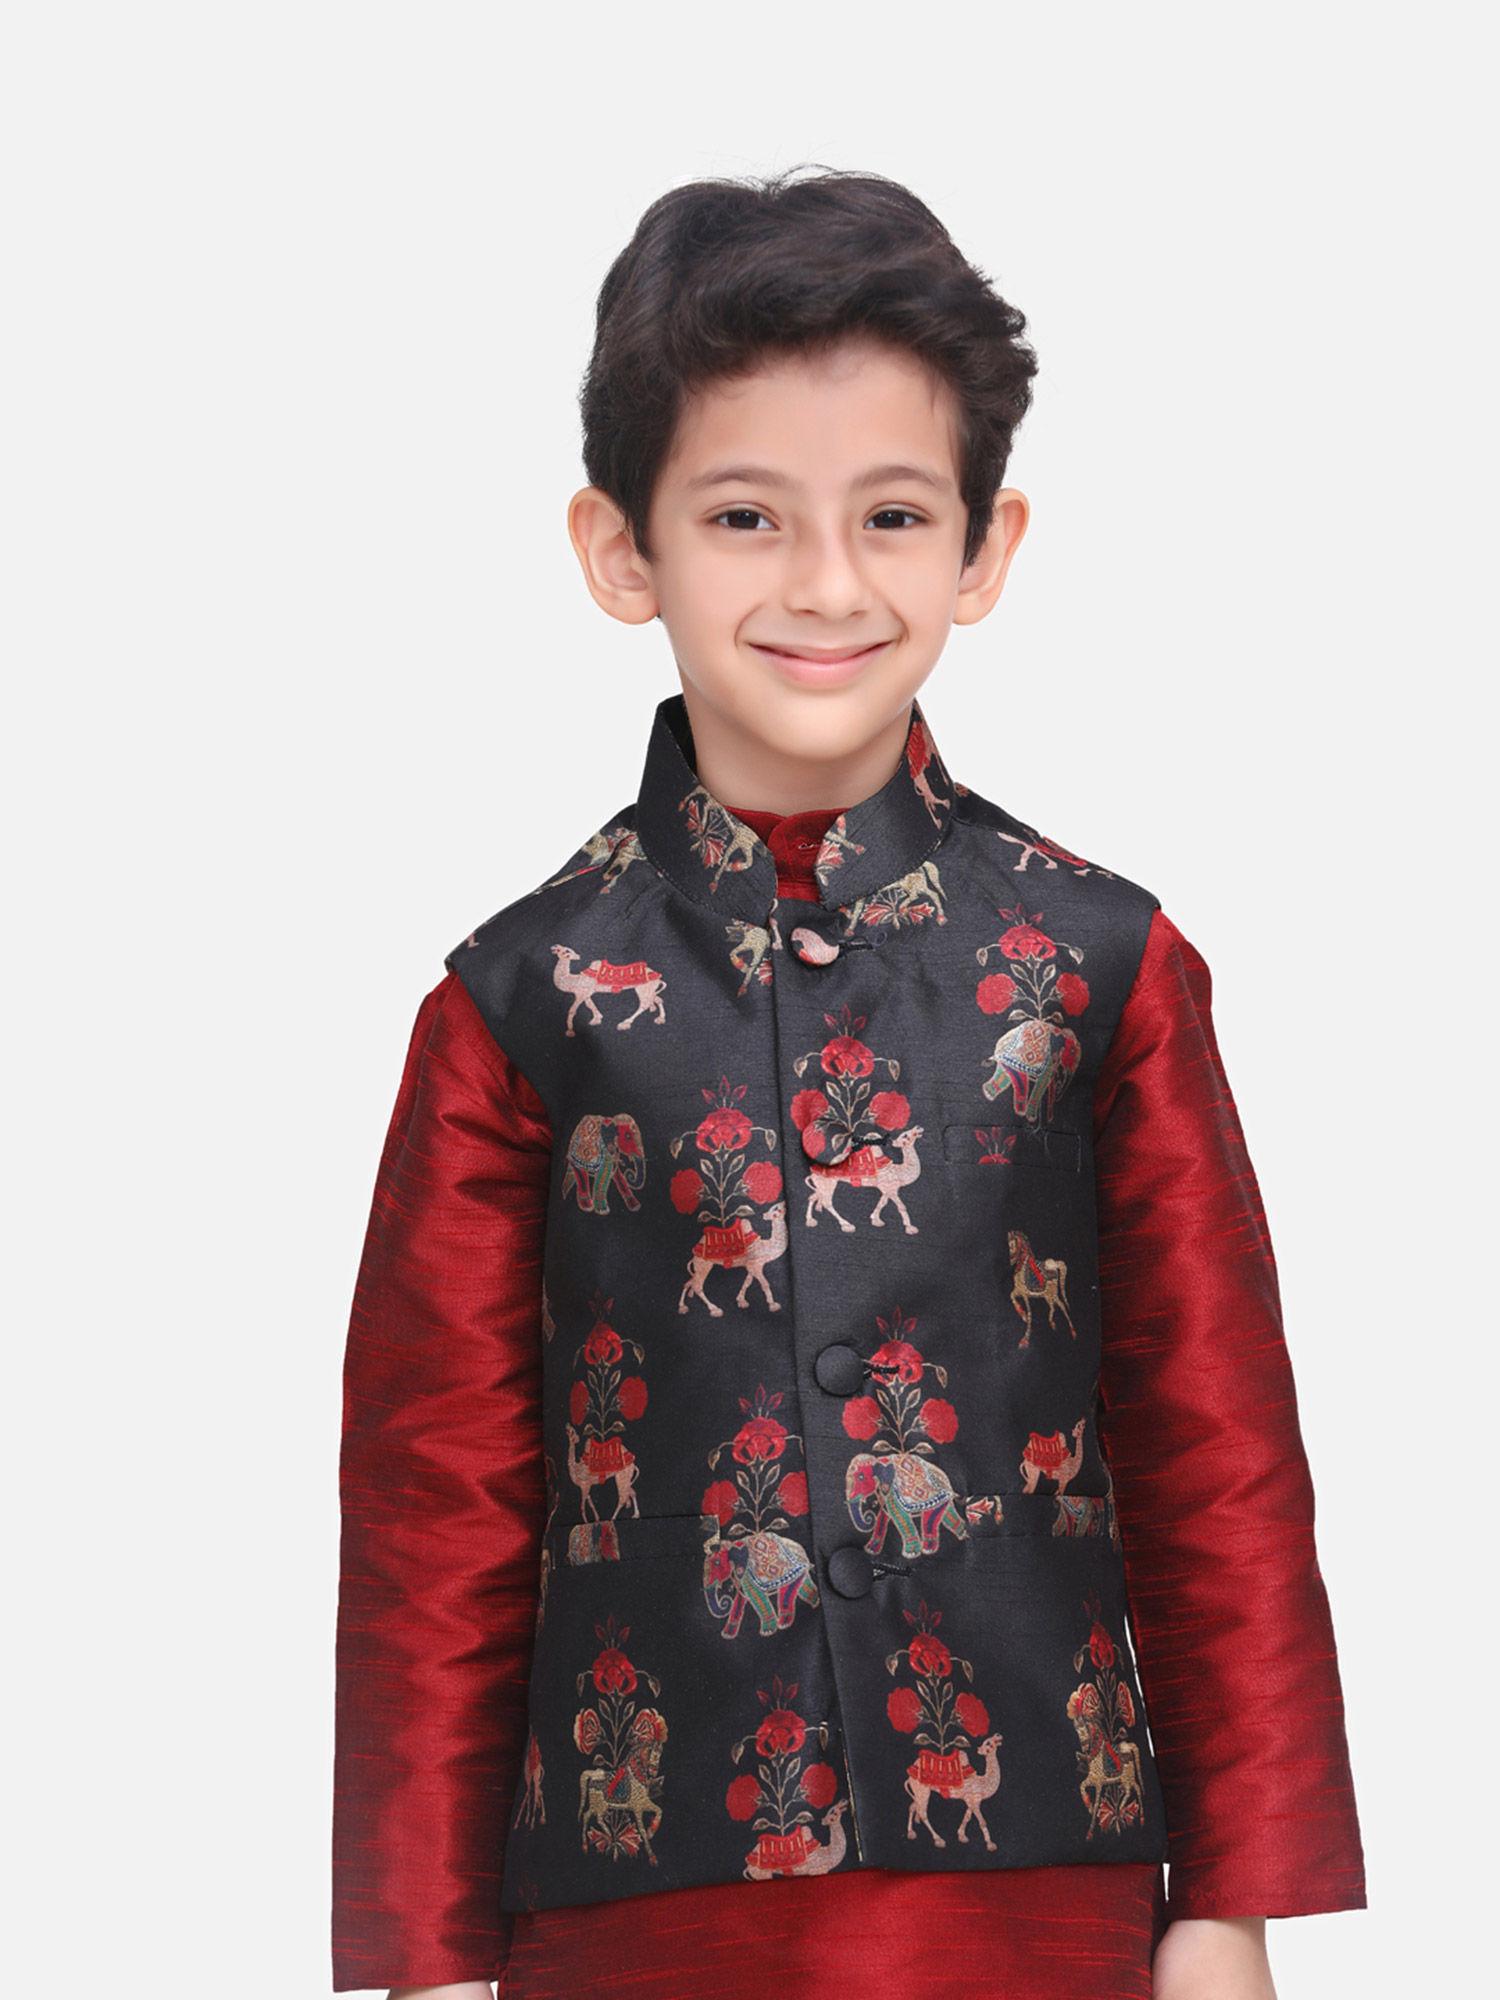 royal motif digital print nehru jacket printed